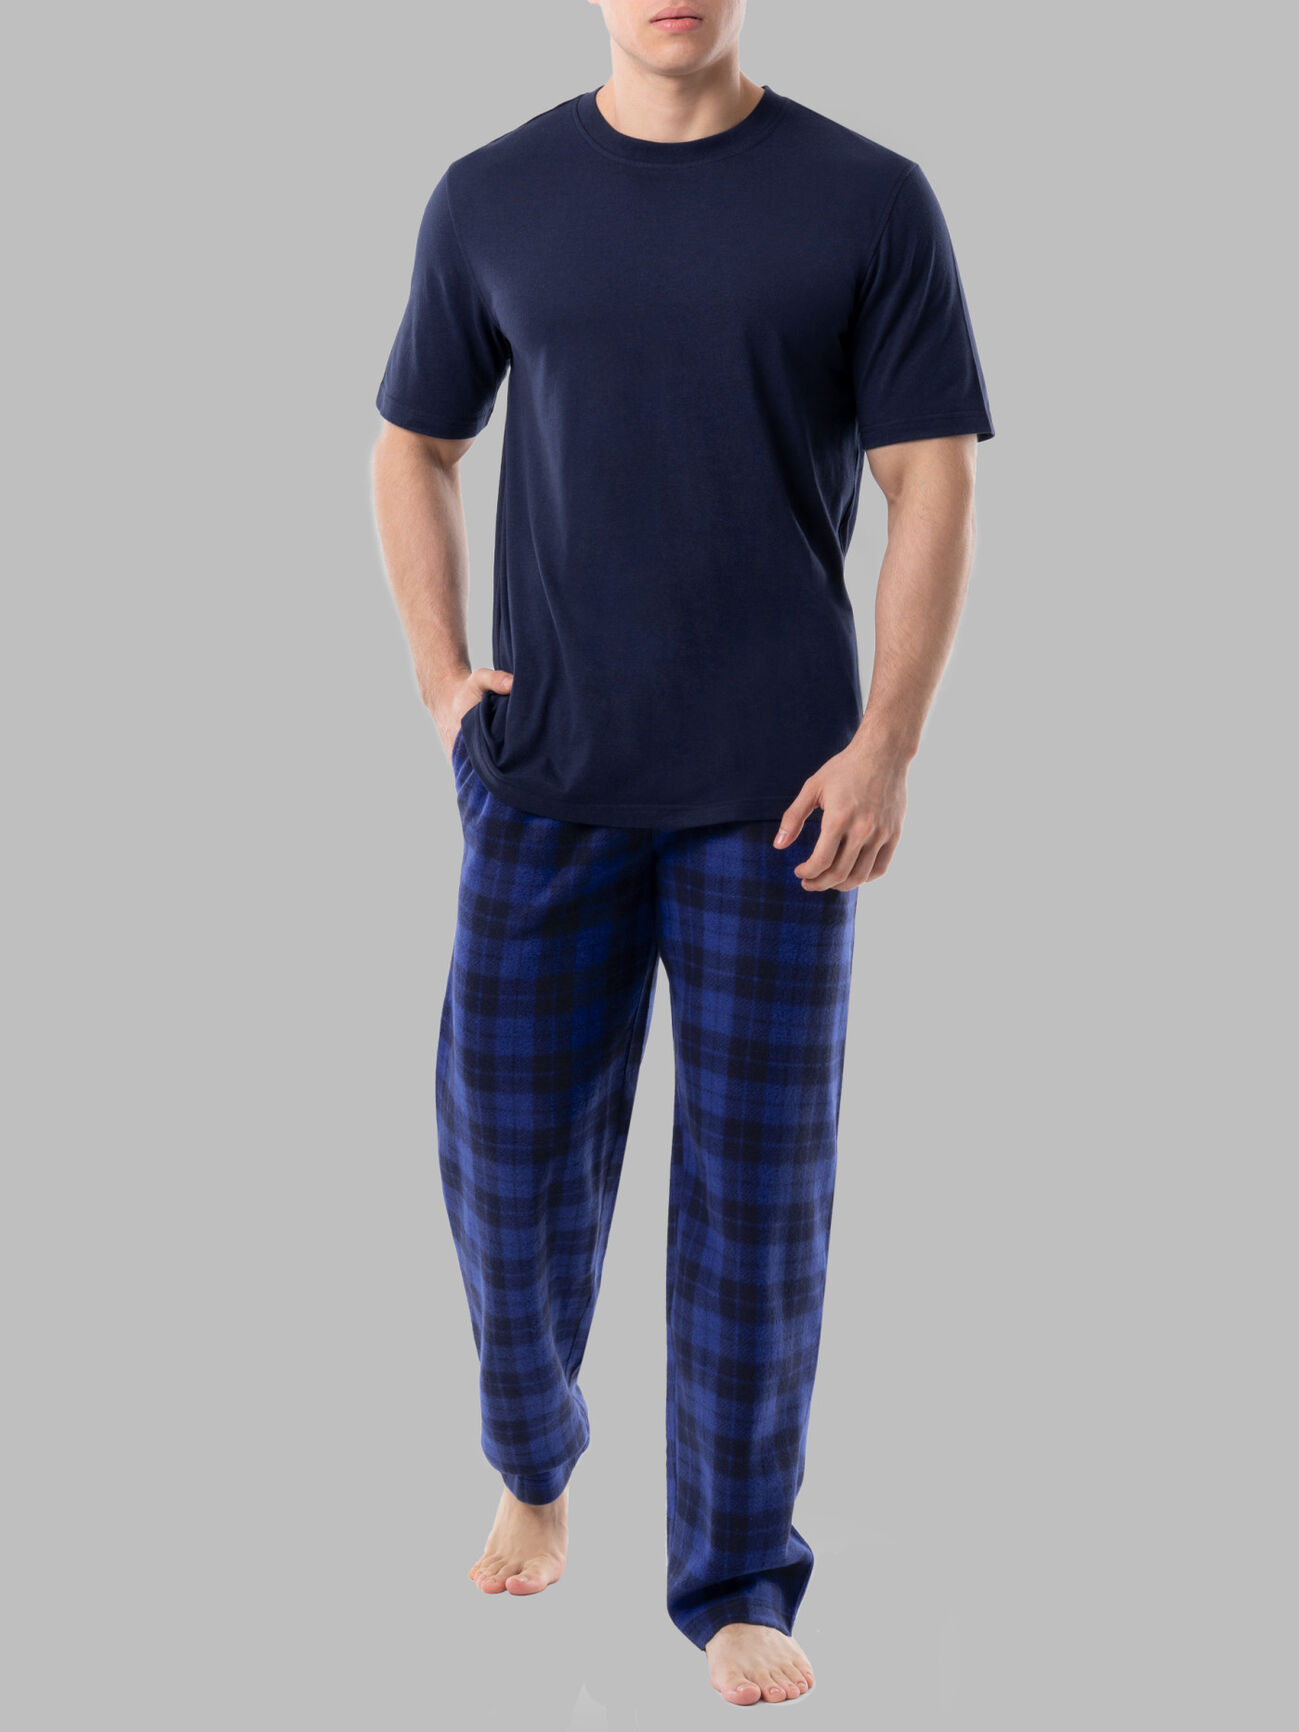 3 Pack Pajama Lounge 100% Cotton Pants Bottoms Sleepwear PJs S-6XL (Big &  Tall)